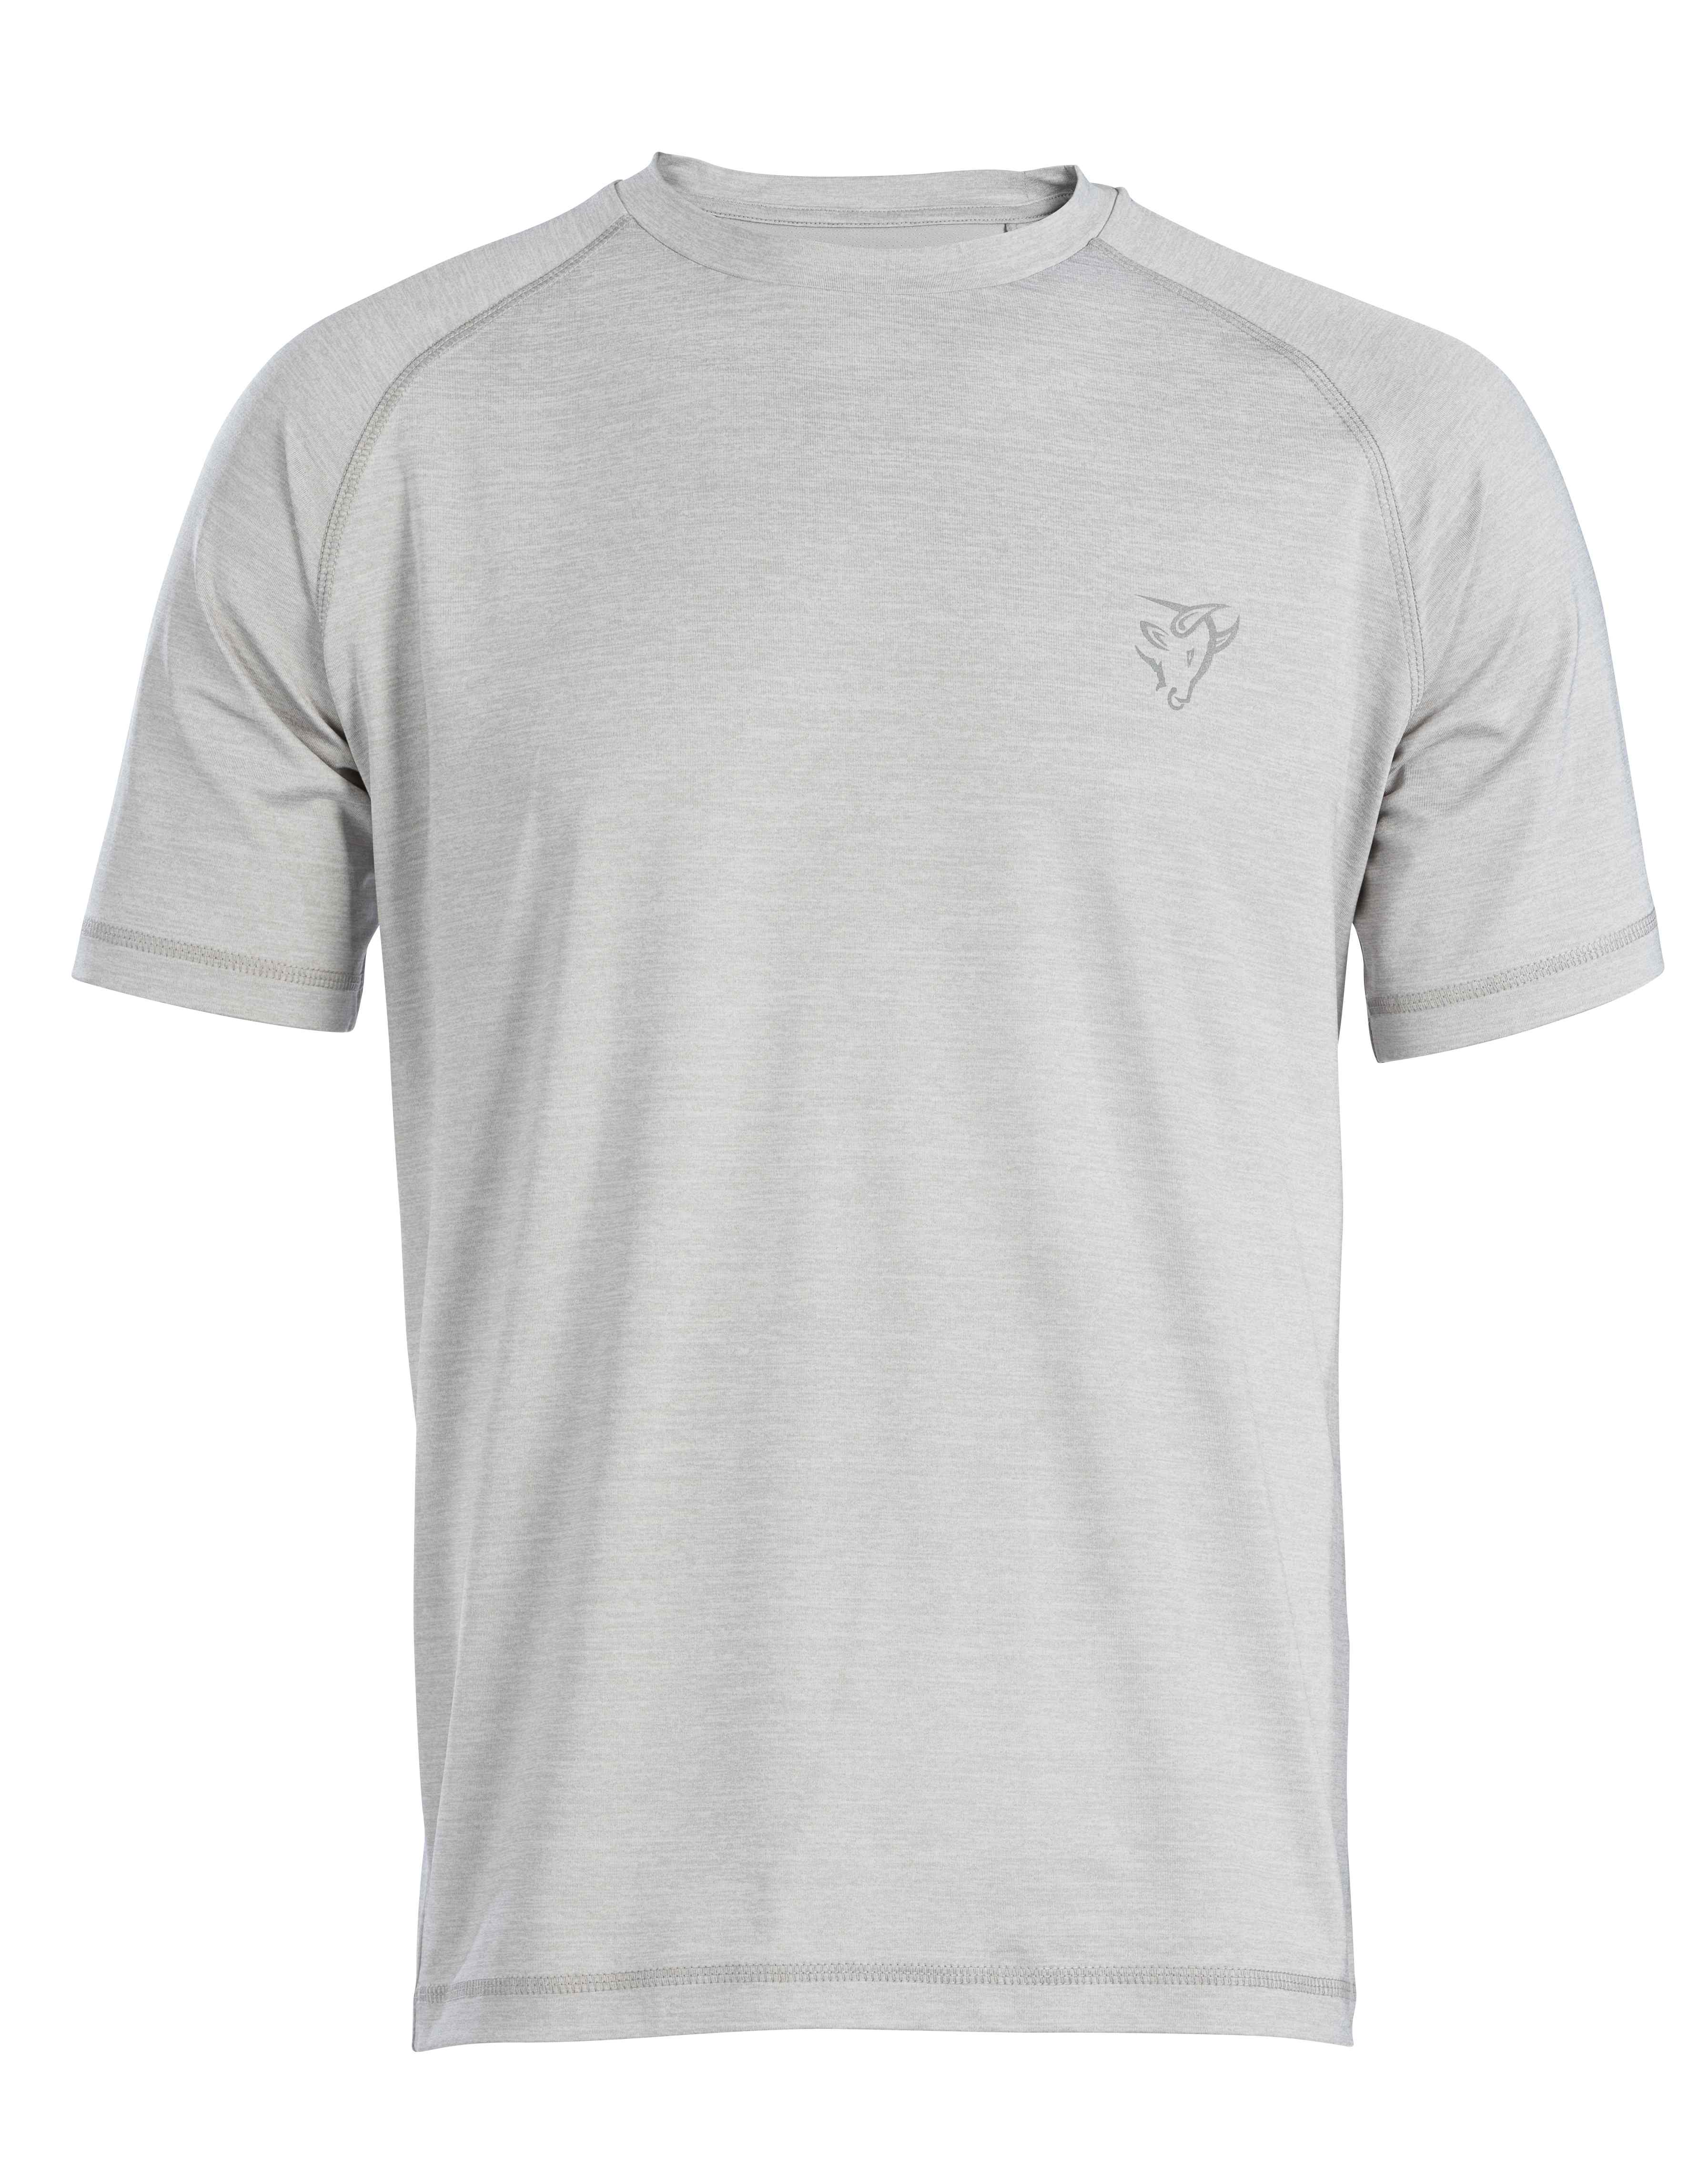 OX Tech Crew T-Shirt Grey - XXL